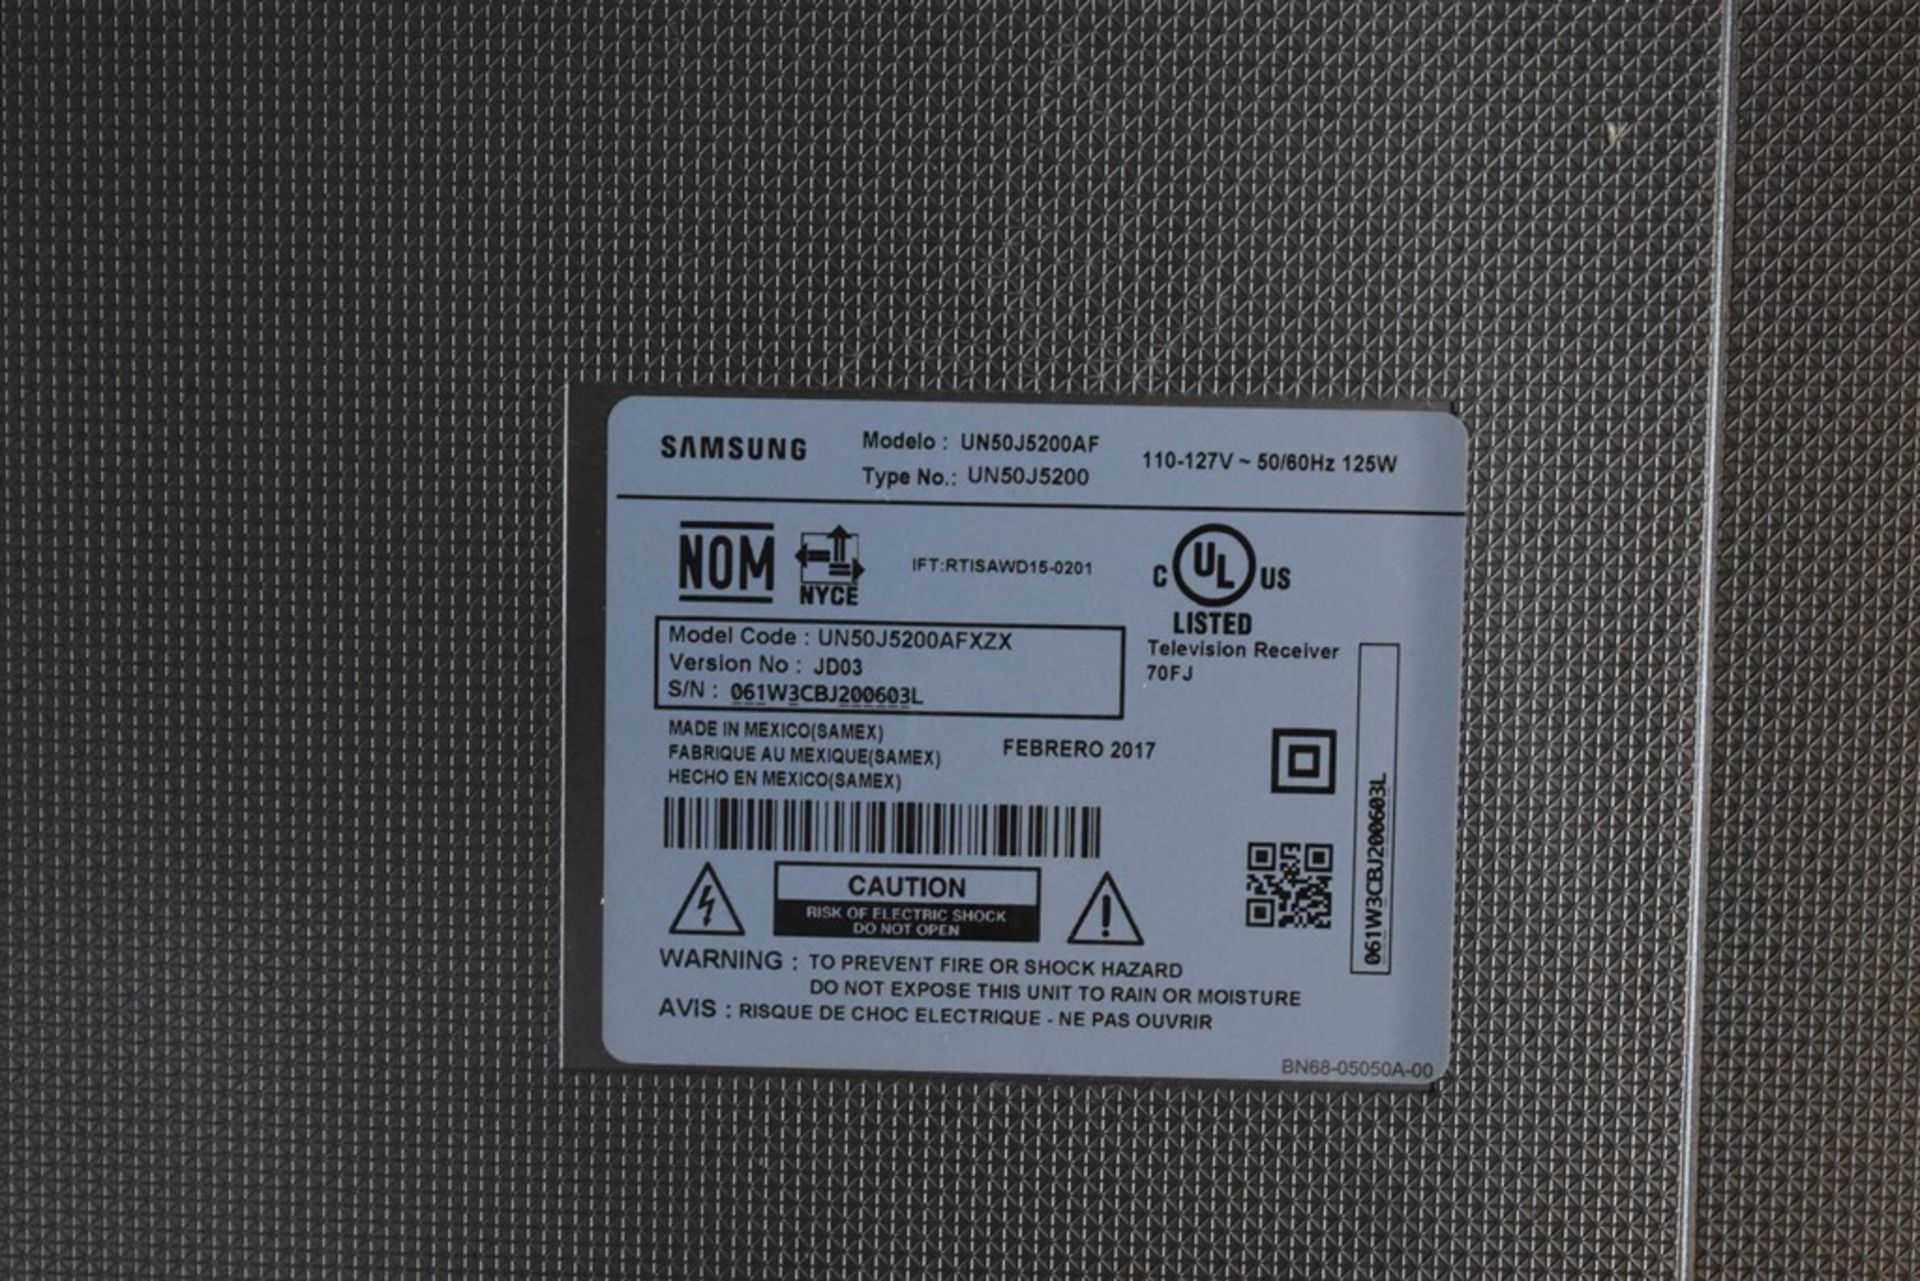 Pantalla Full HD de 50 pulgadas marca Samsung, Modelo: UN50J5200AF, Serie: 061W3CBJ200603L - Bild 6 aus 7